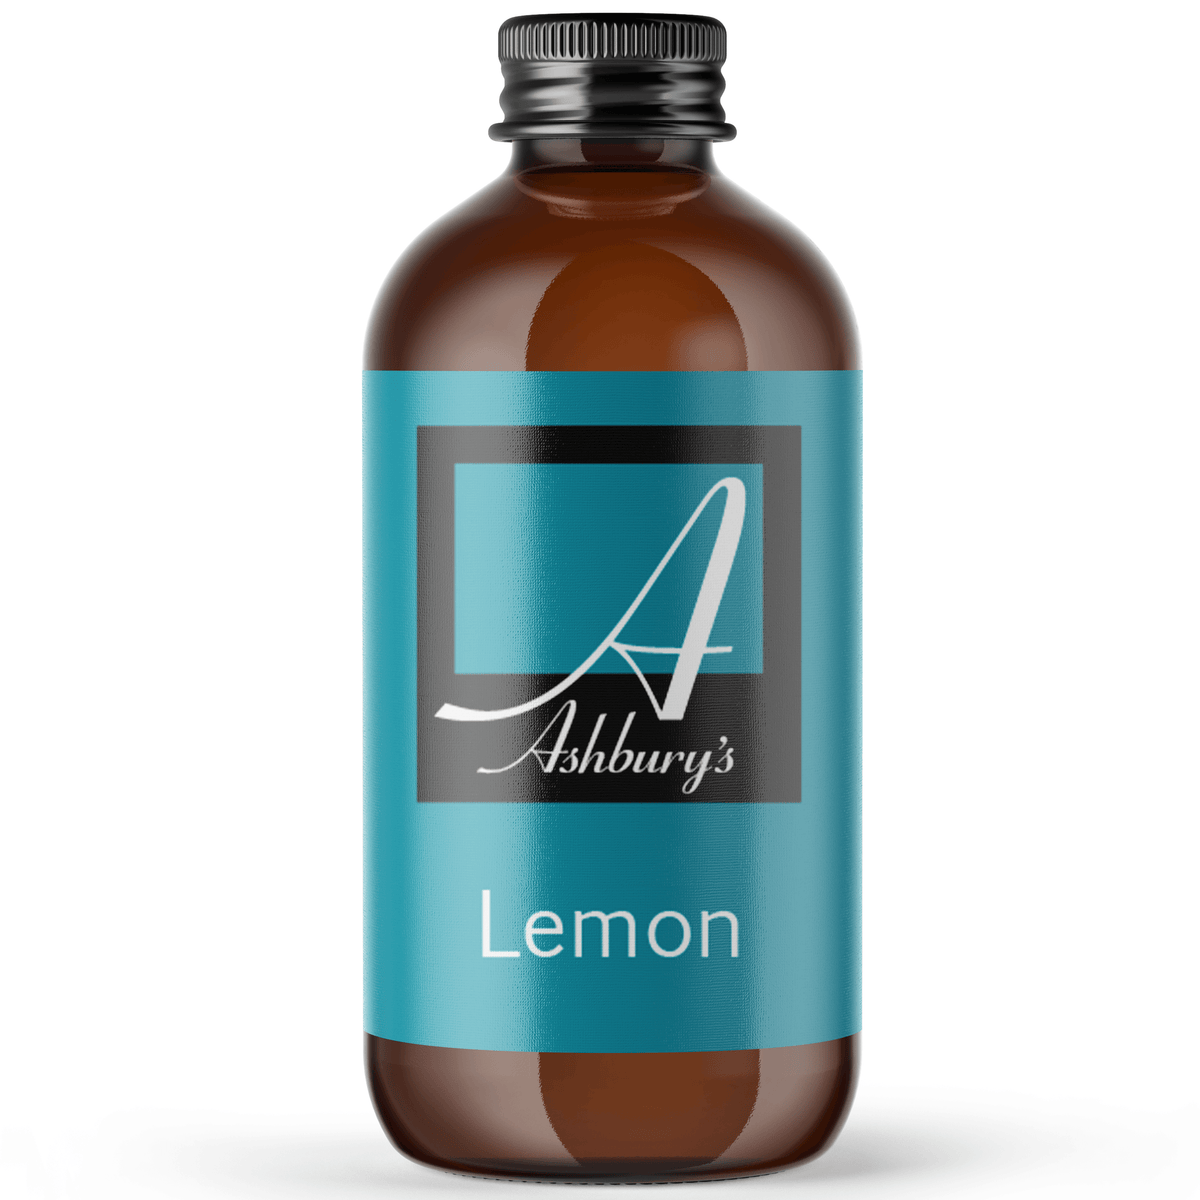 Lemon (Citrus Limonum)